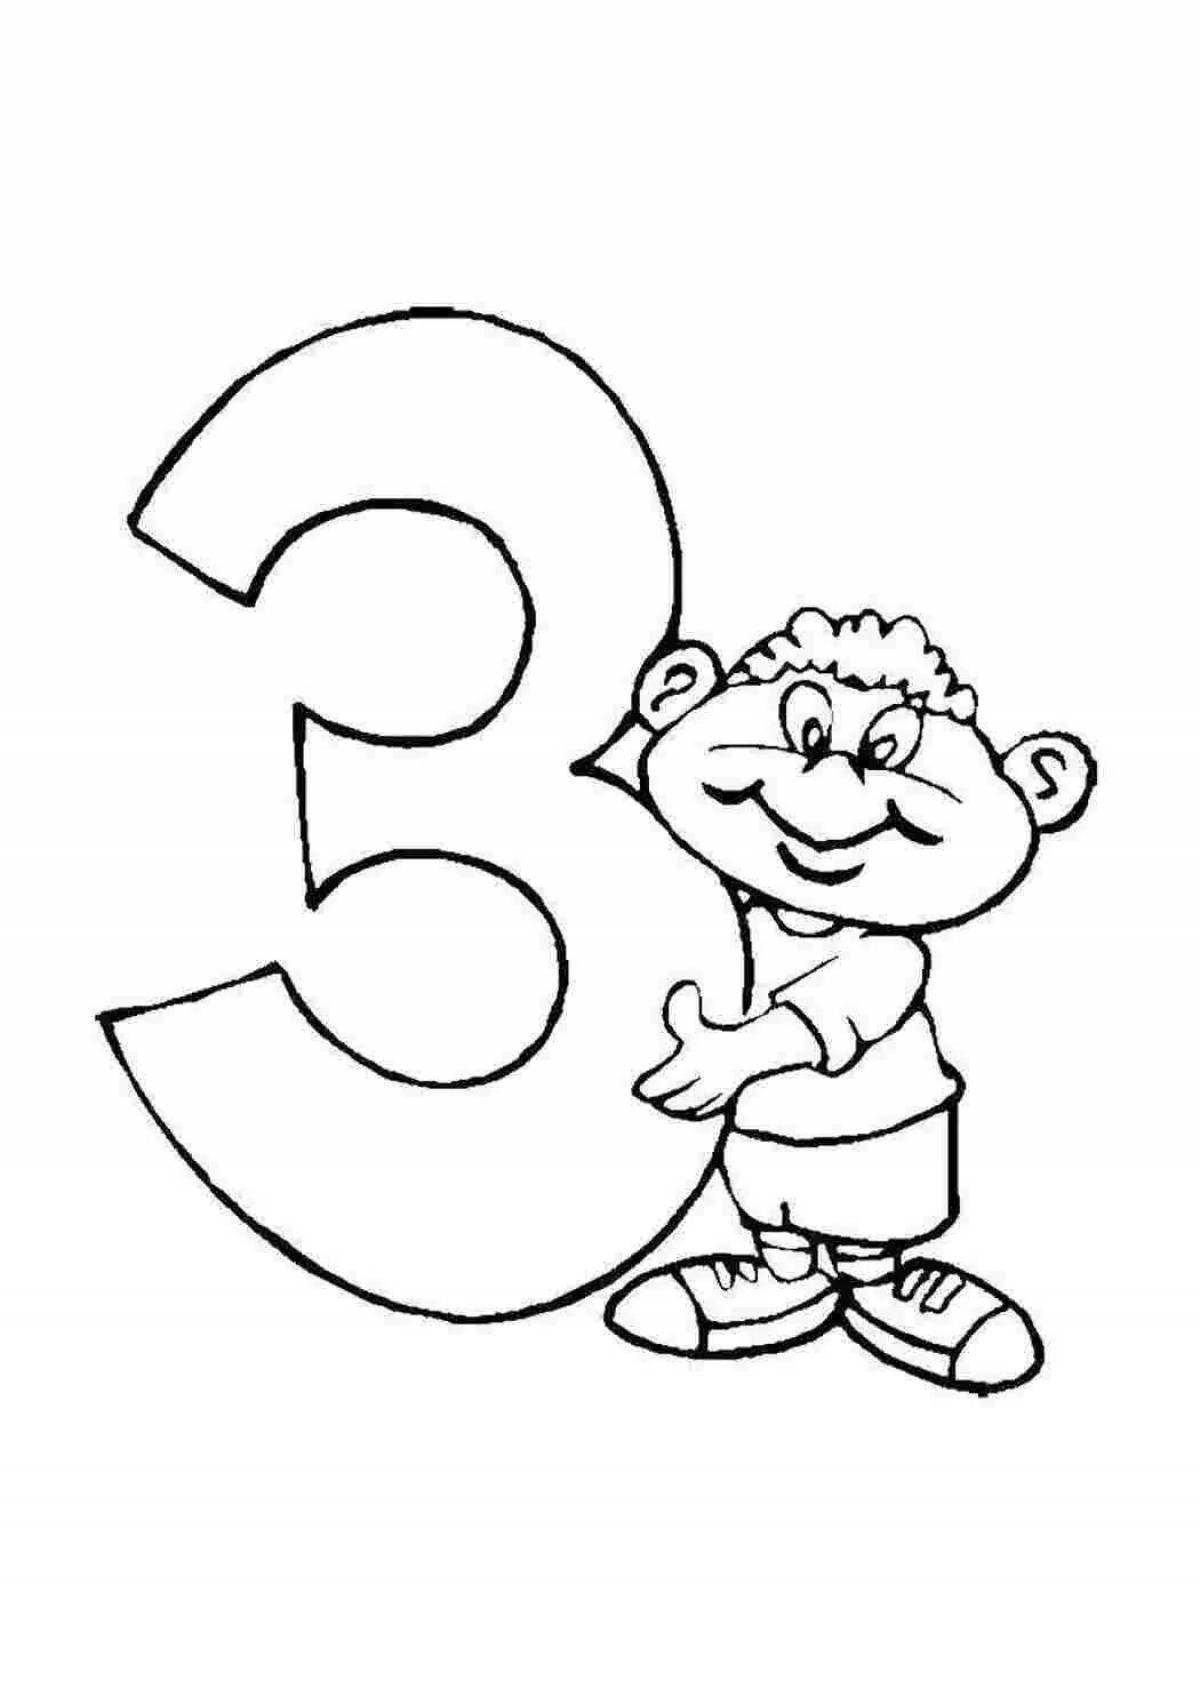 Раскраска цифры 3 для детей